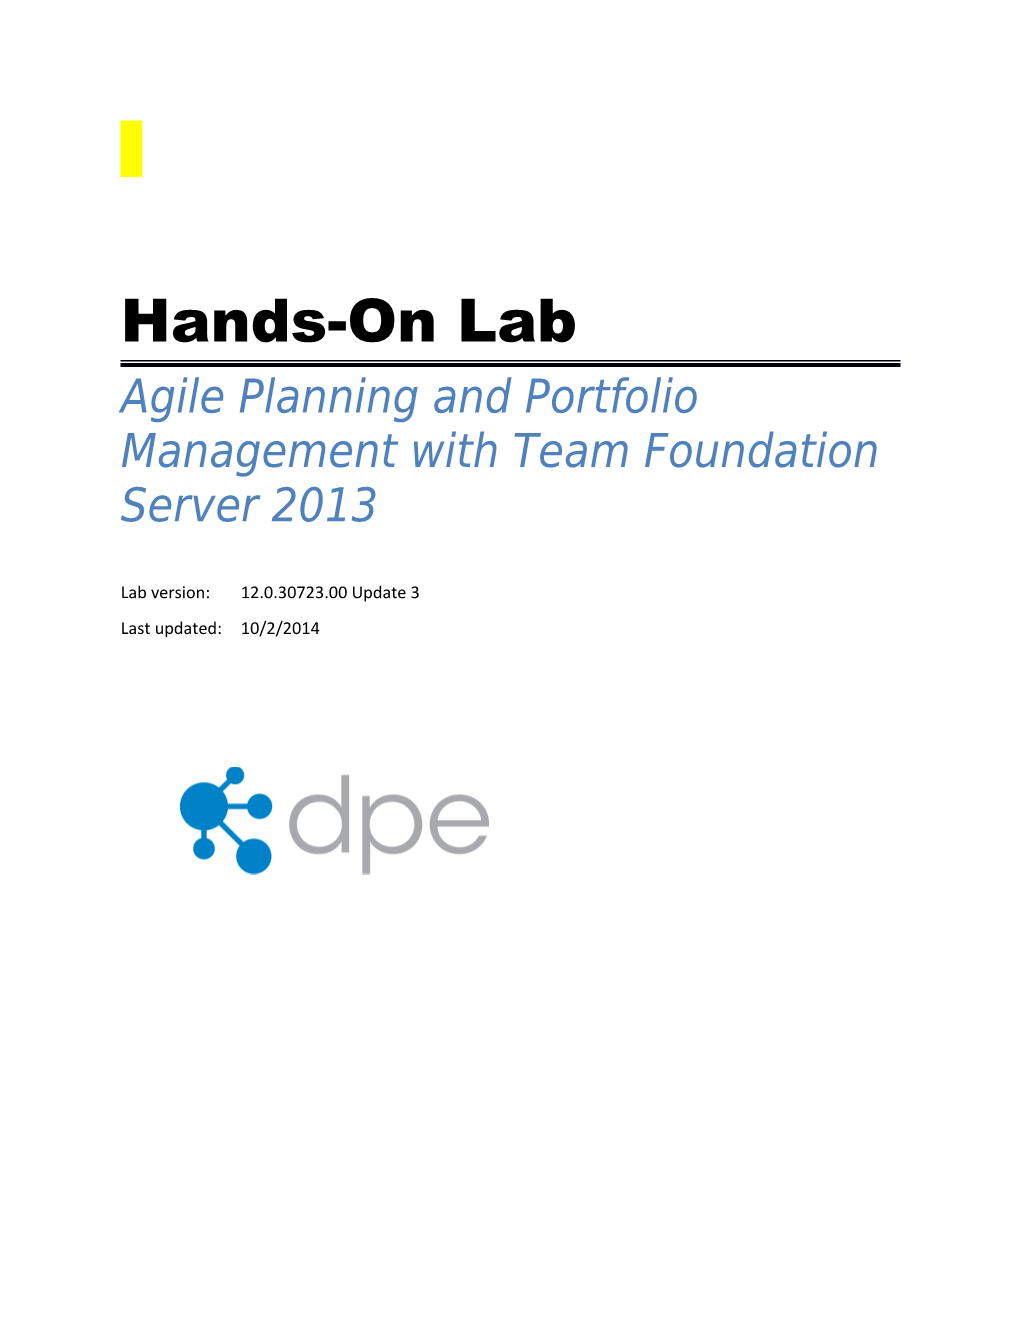 Agile Planning and Portfolio Management with Team Foundation Server 2013